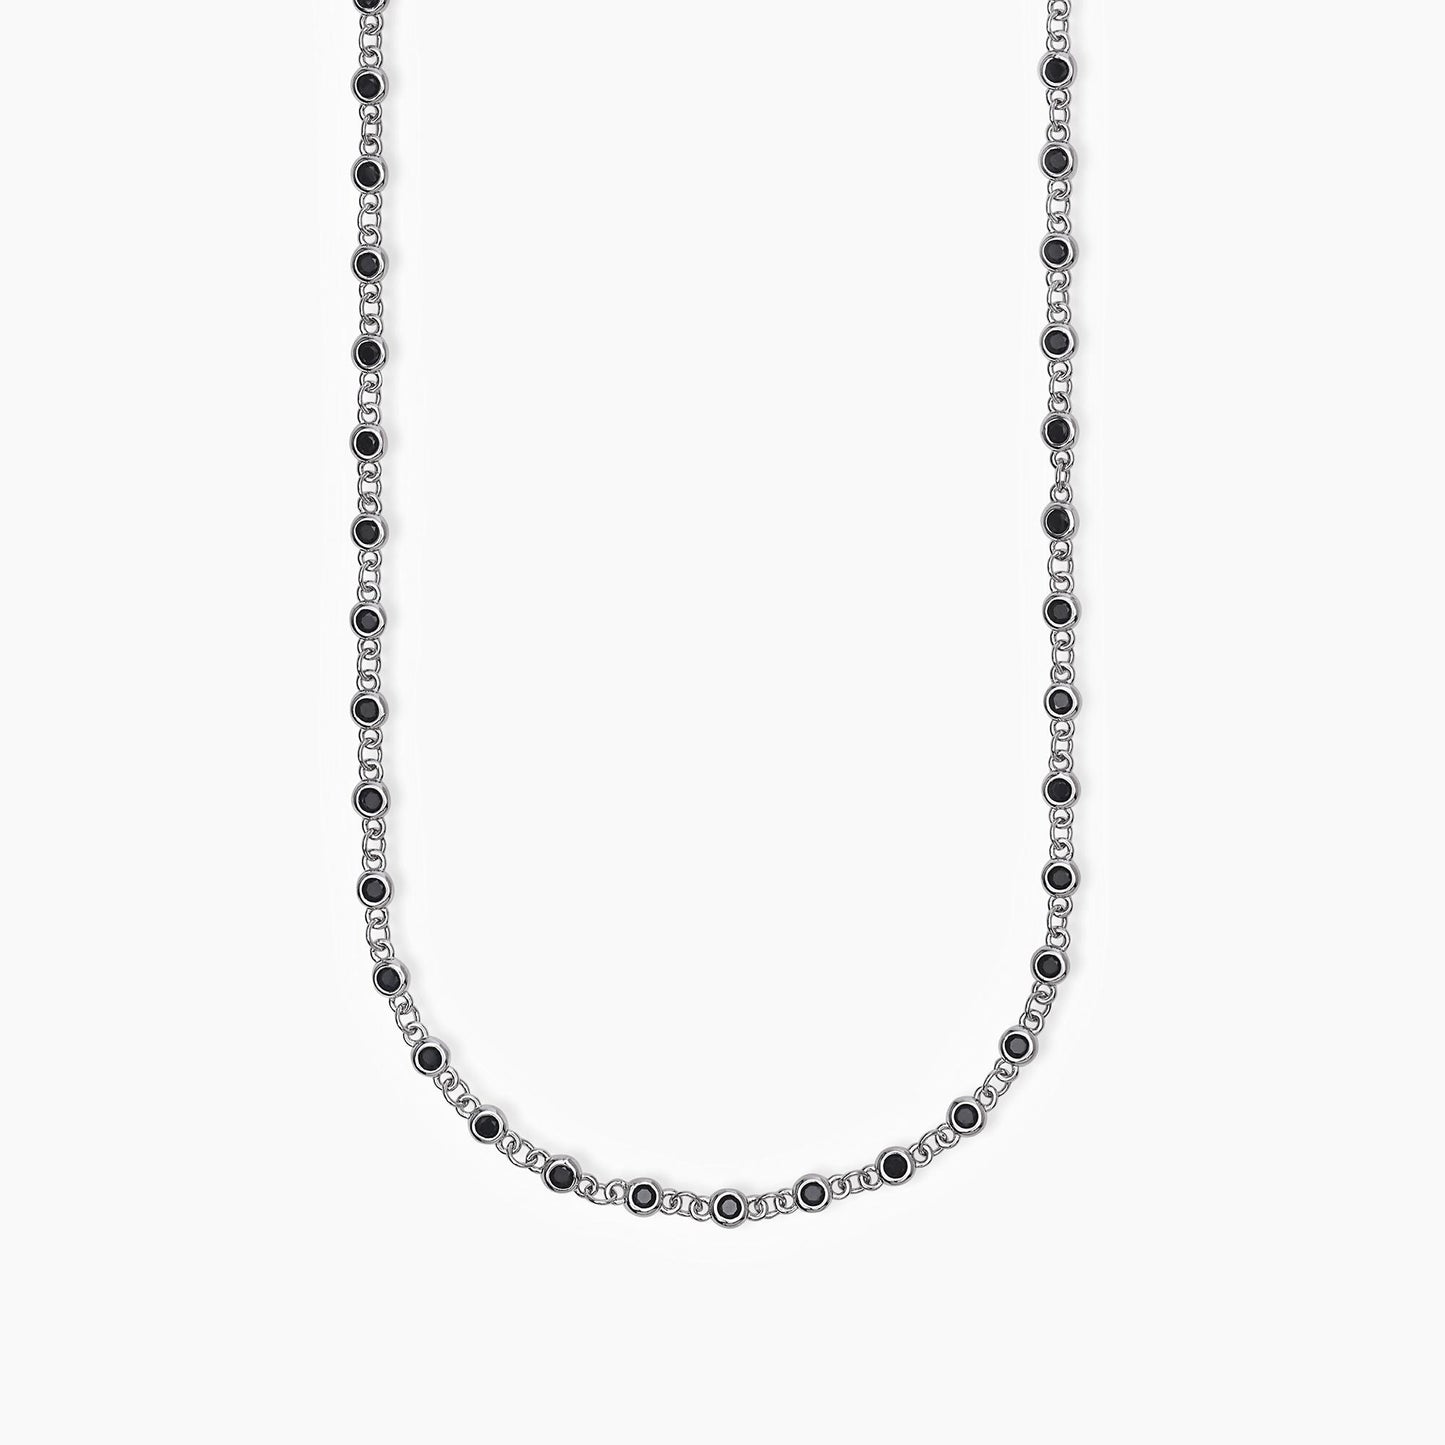 MABINA UOMO - Collana in argento con zirconi neri SKYLINE